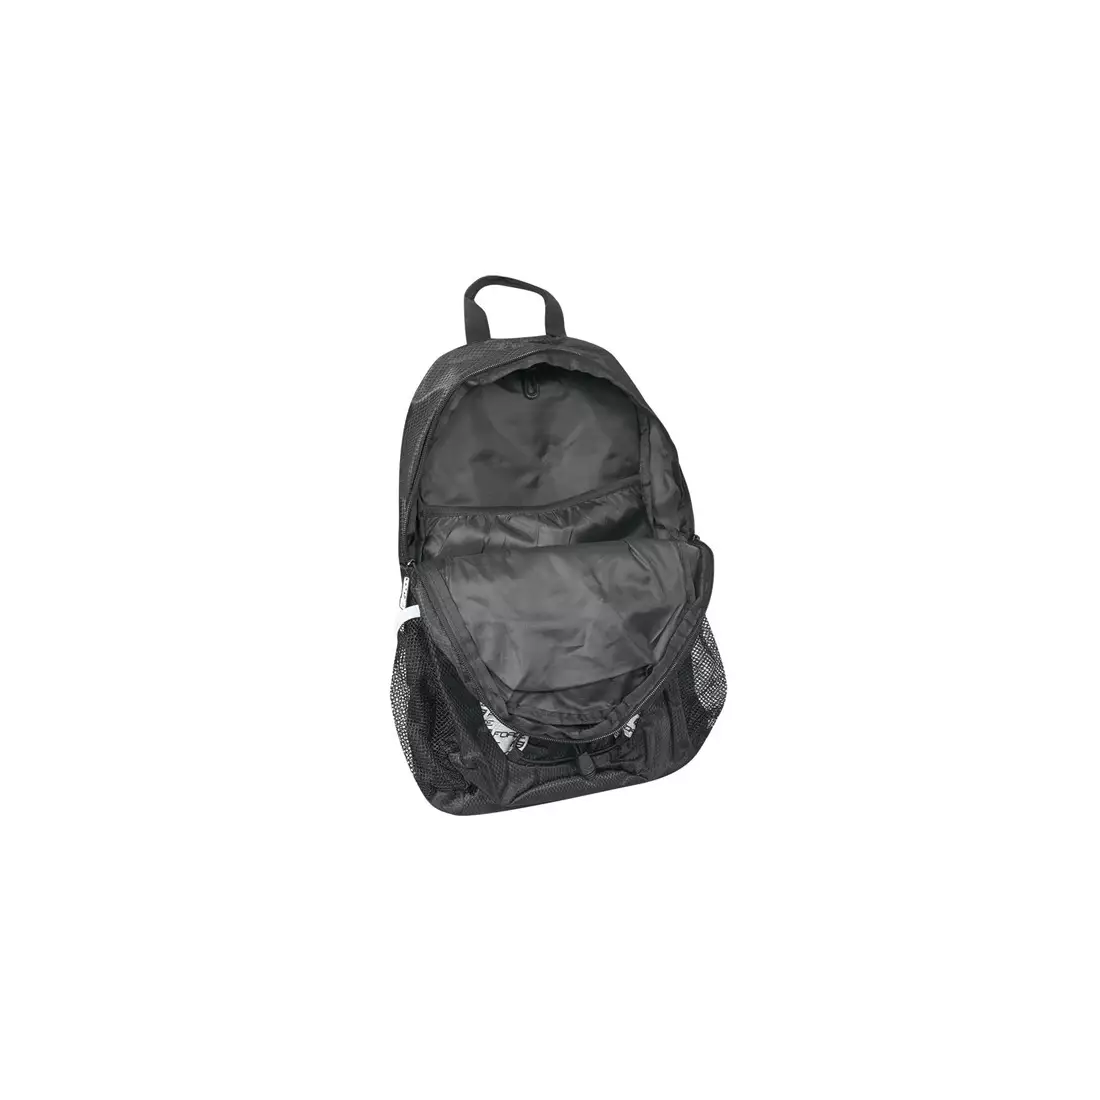 FORCE JORDAN Backpack 20L black and gray 896708